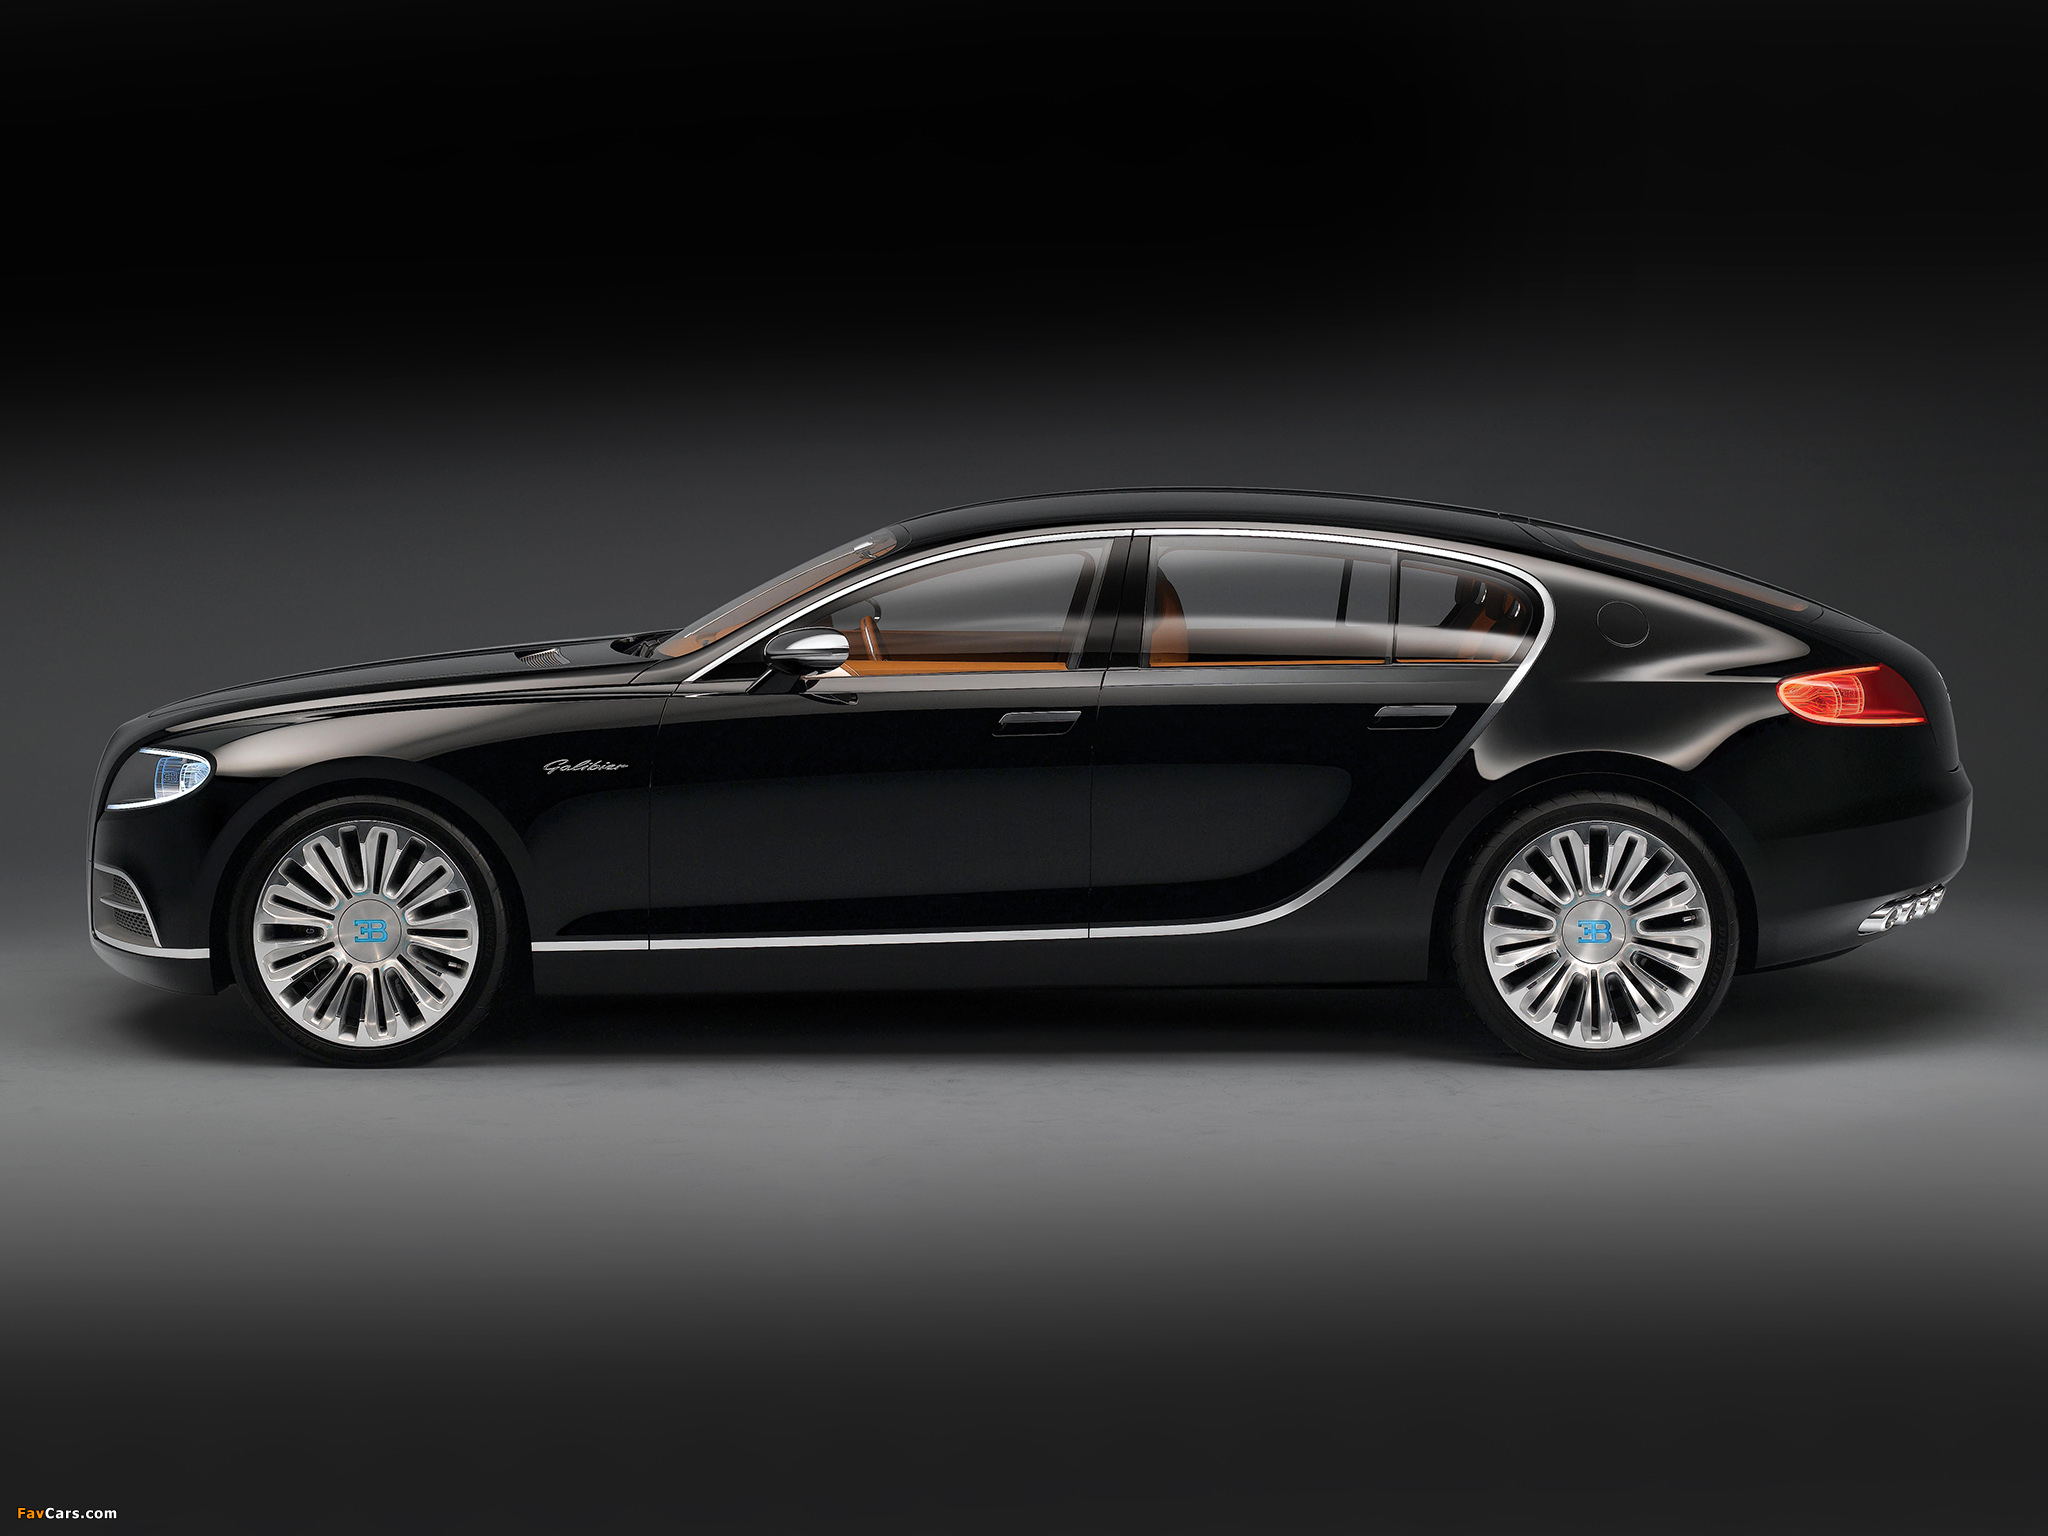 The Luxury Of Power: The 2009 Bugatti 16C Galibier Concept